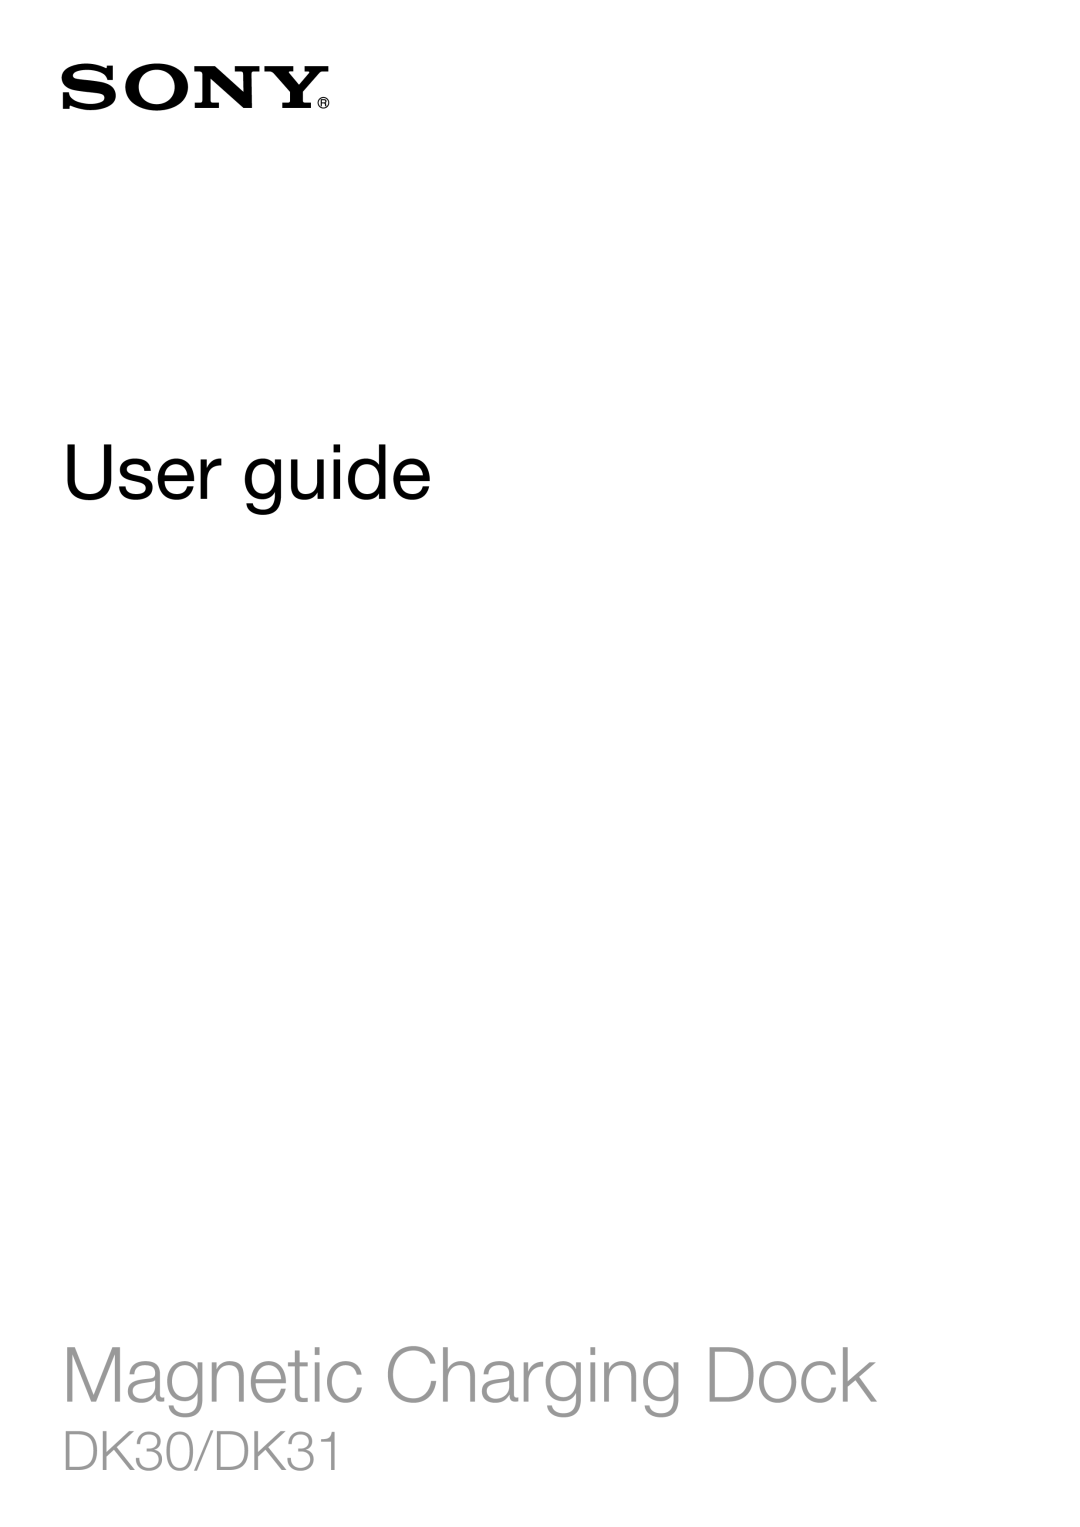 Sony manual User guide, Magnetic Charging Dock, DK30/DK31 